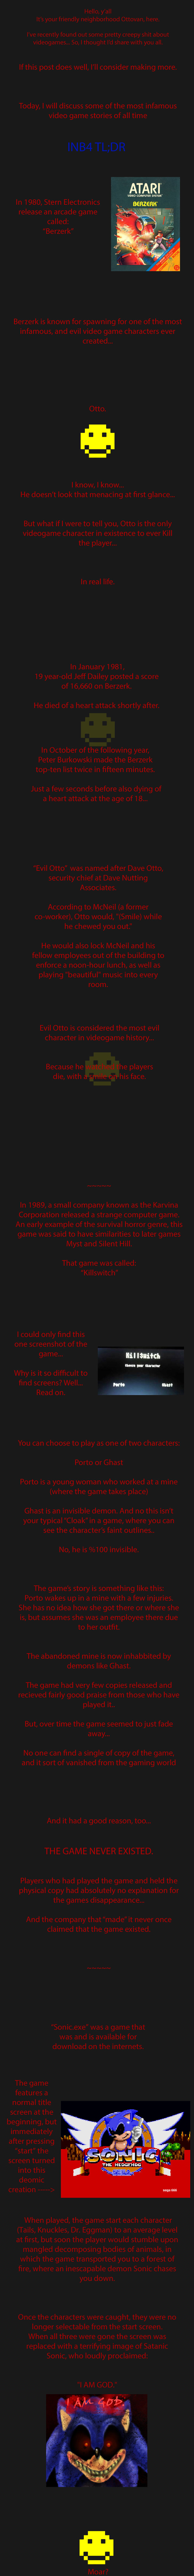 Horror game legends